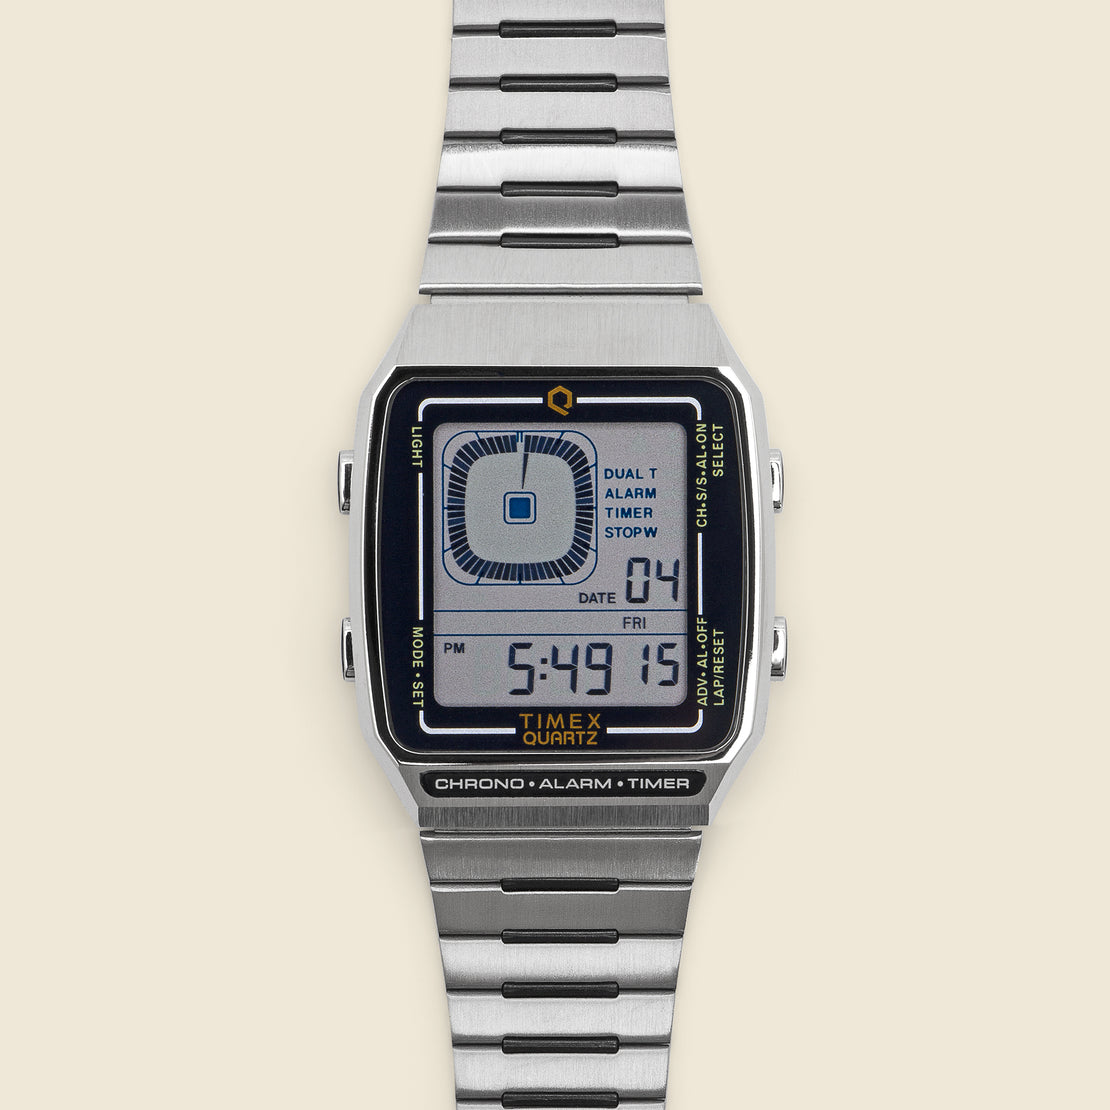 Timex Q Digital LCA Stainless Steel Bracelet Watch 32.5mm - Stainless Steel